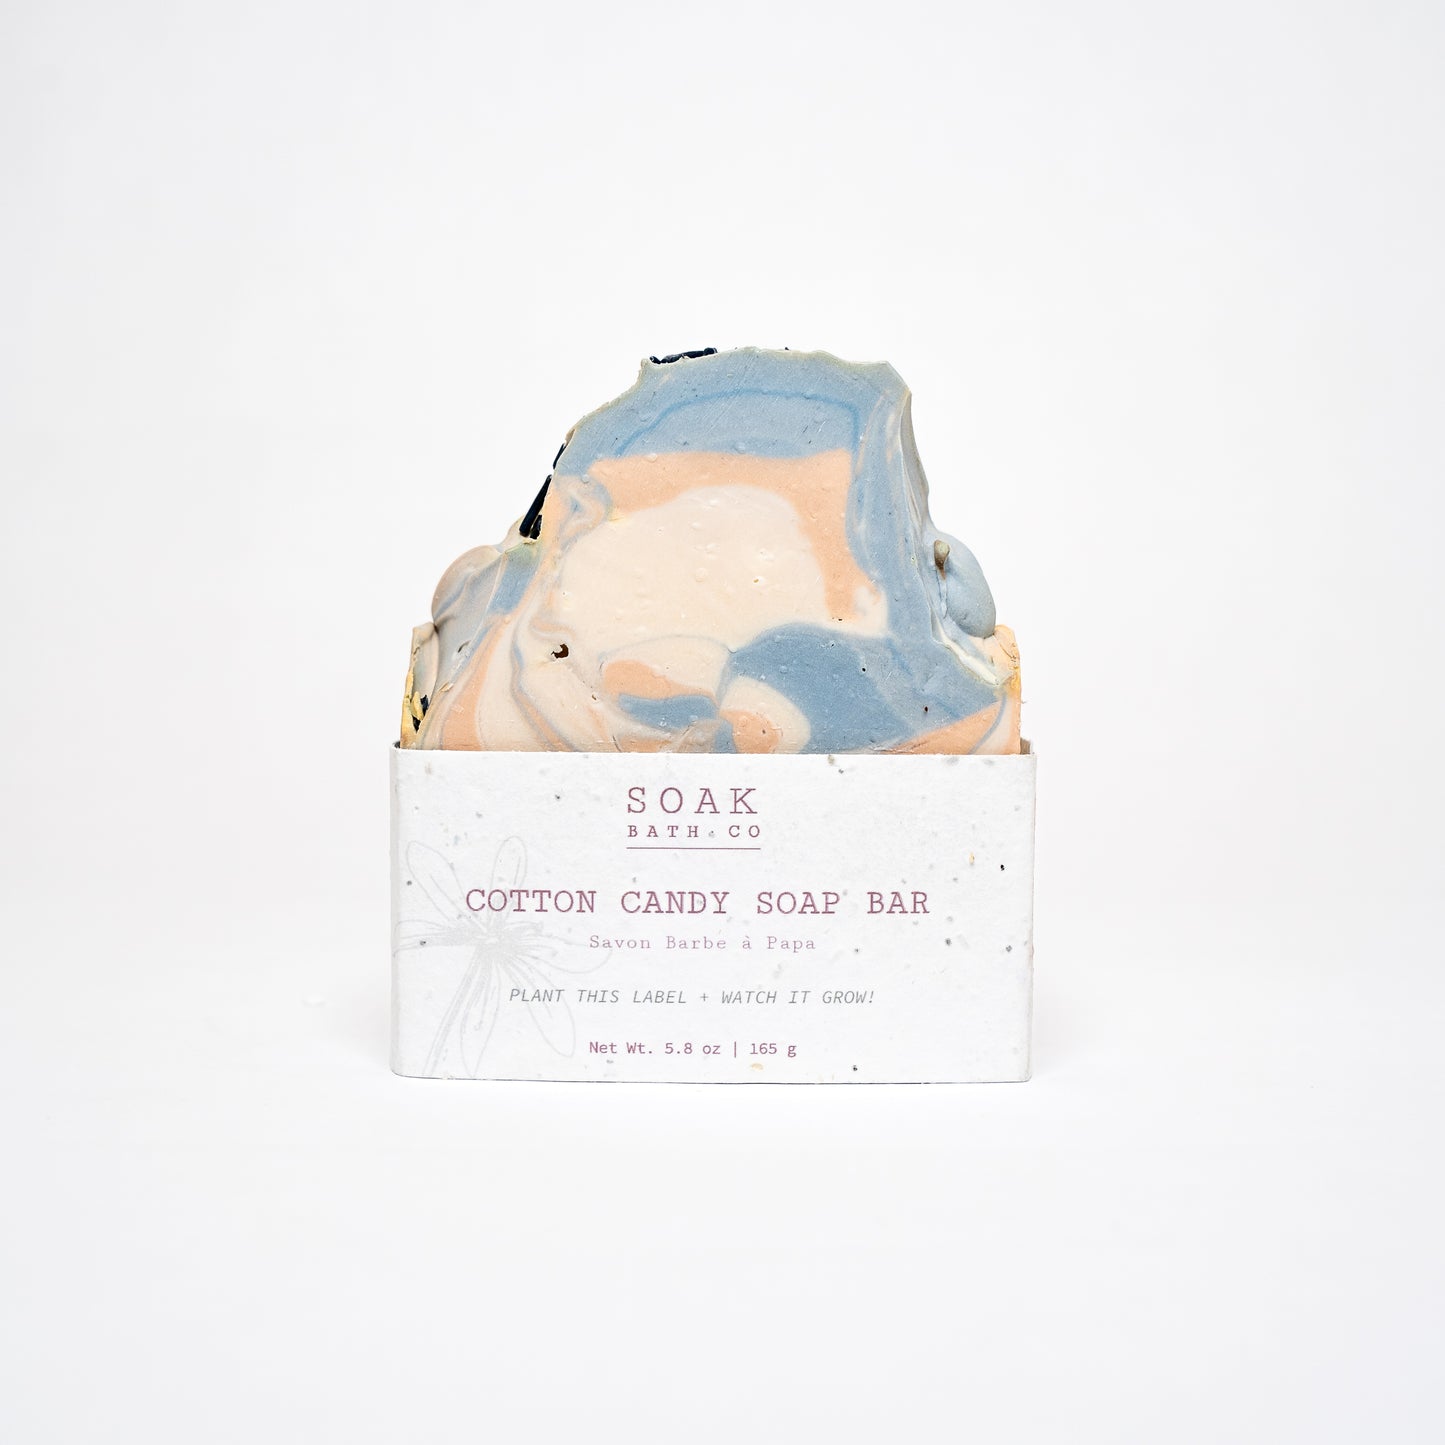 Cotton Candy Soap Bar